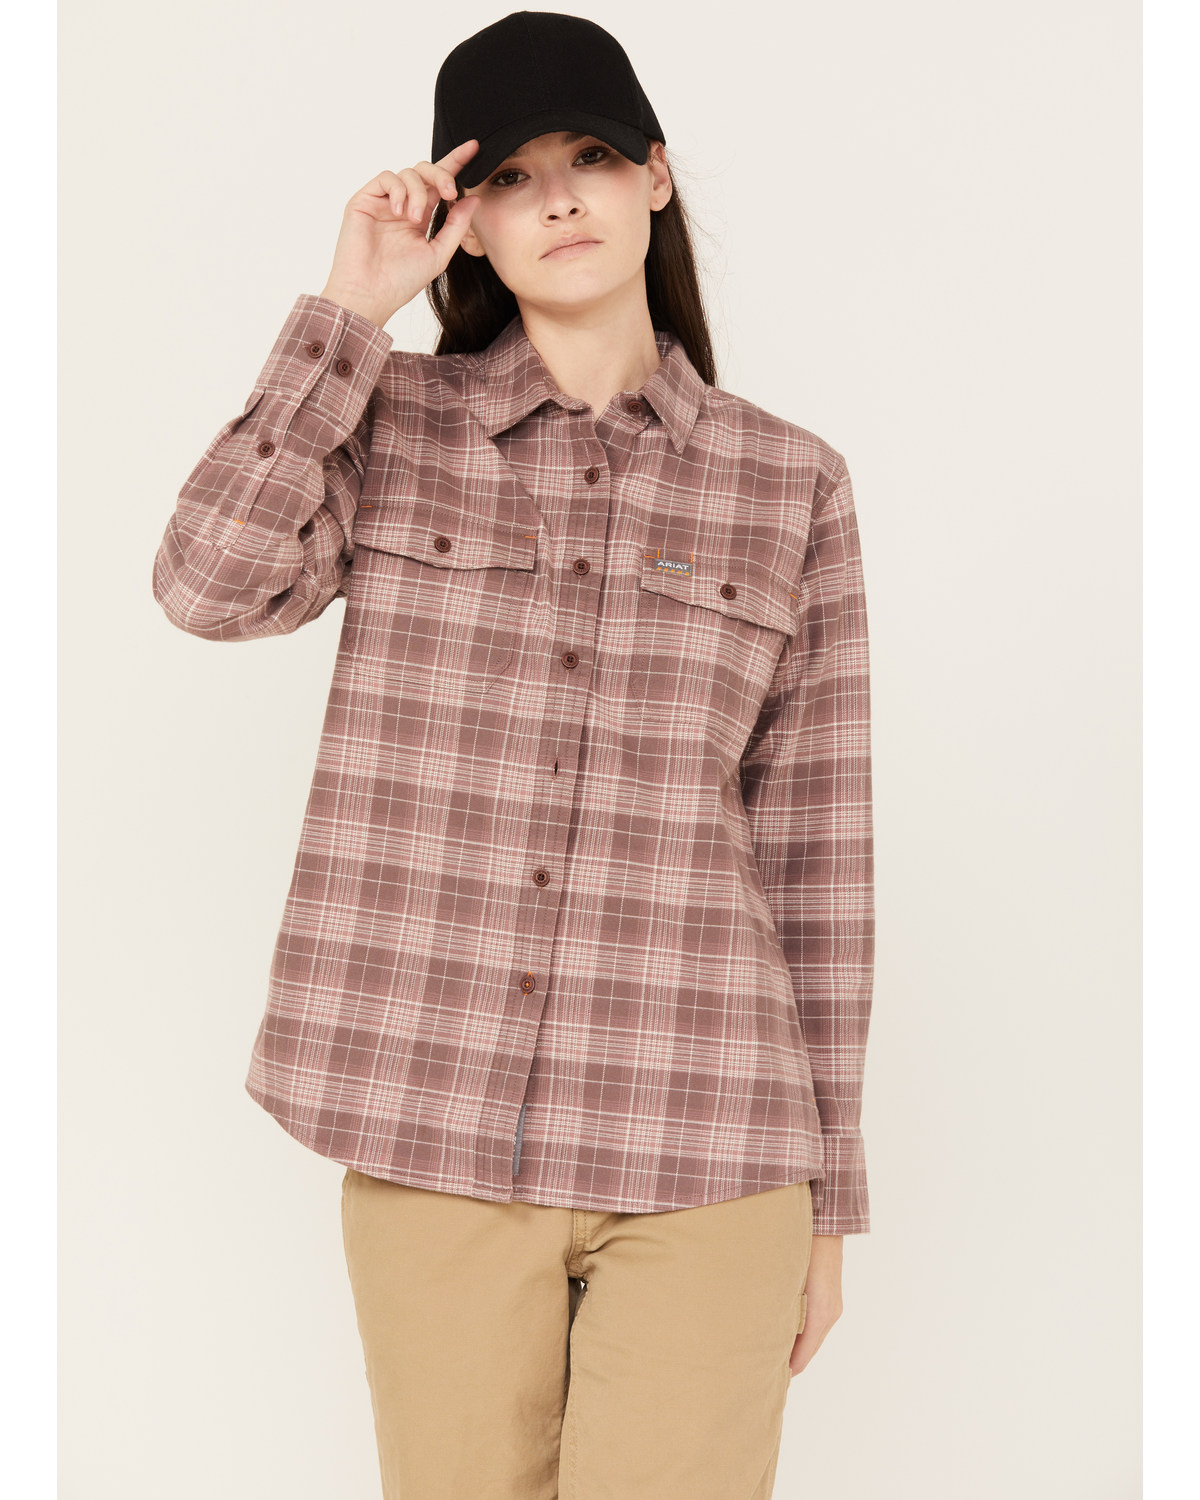 Ariat Women's Rebar Flannel Long Sleeve Button Down Plaid Work Shirt